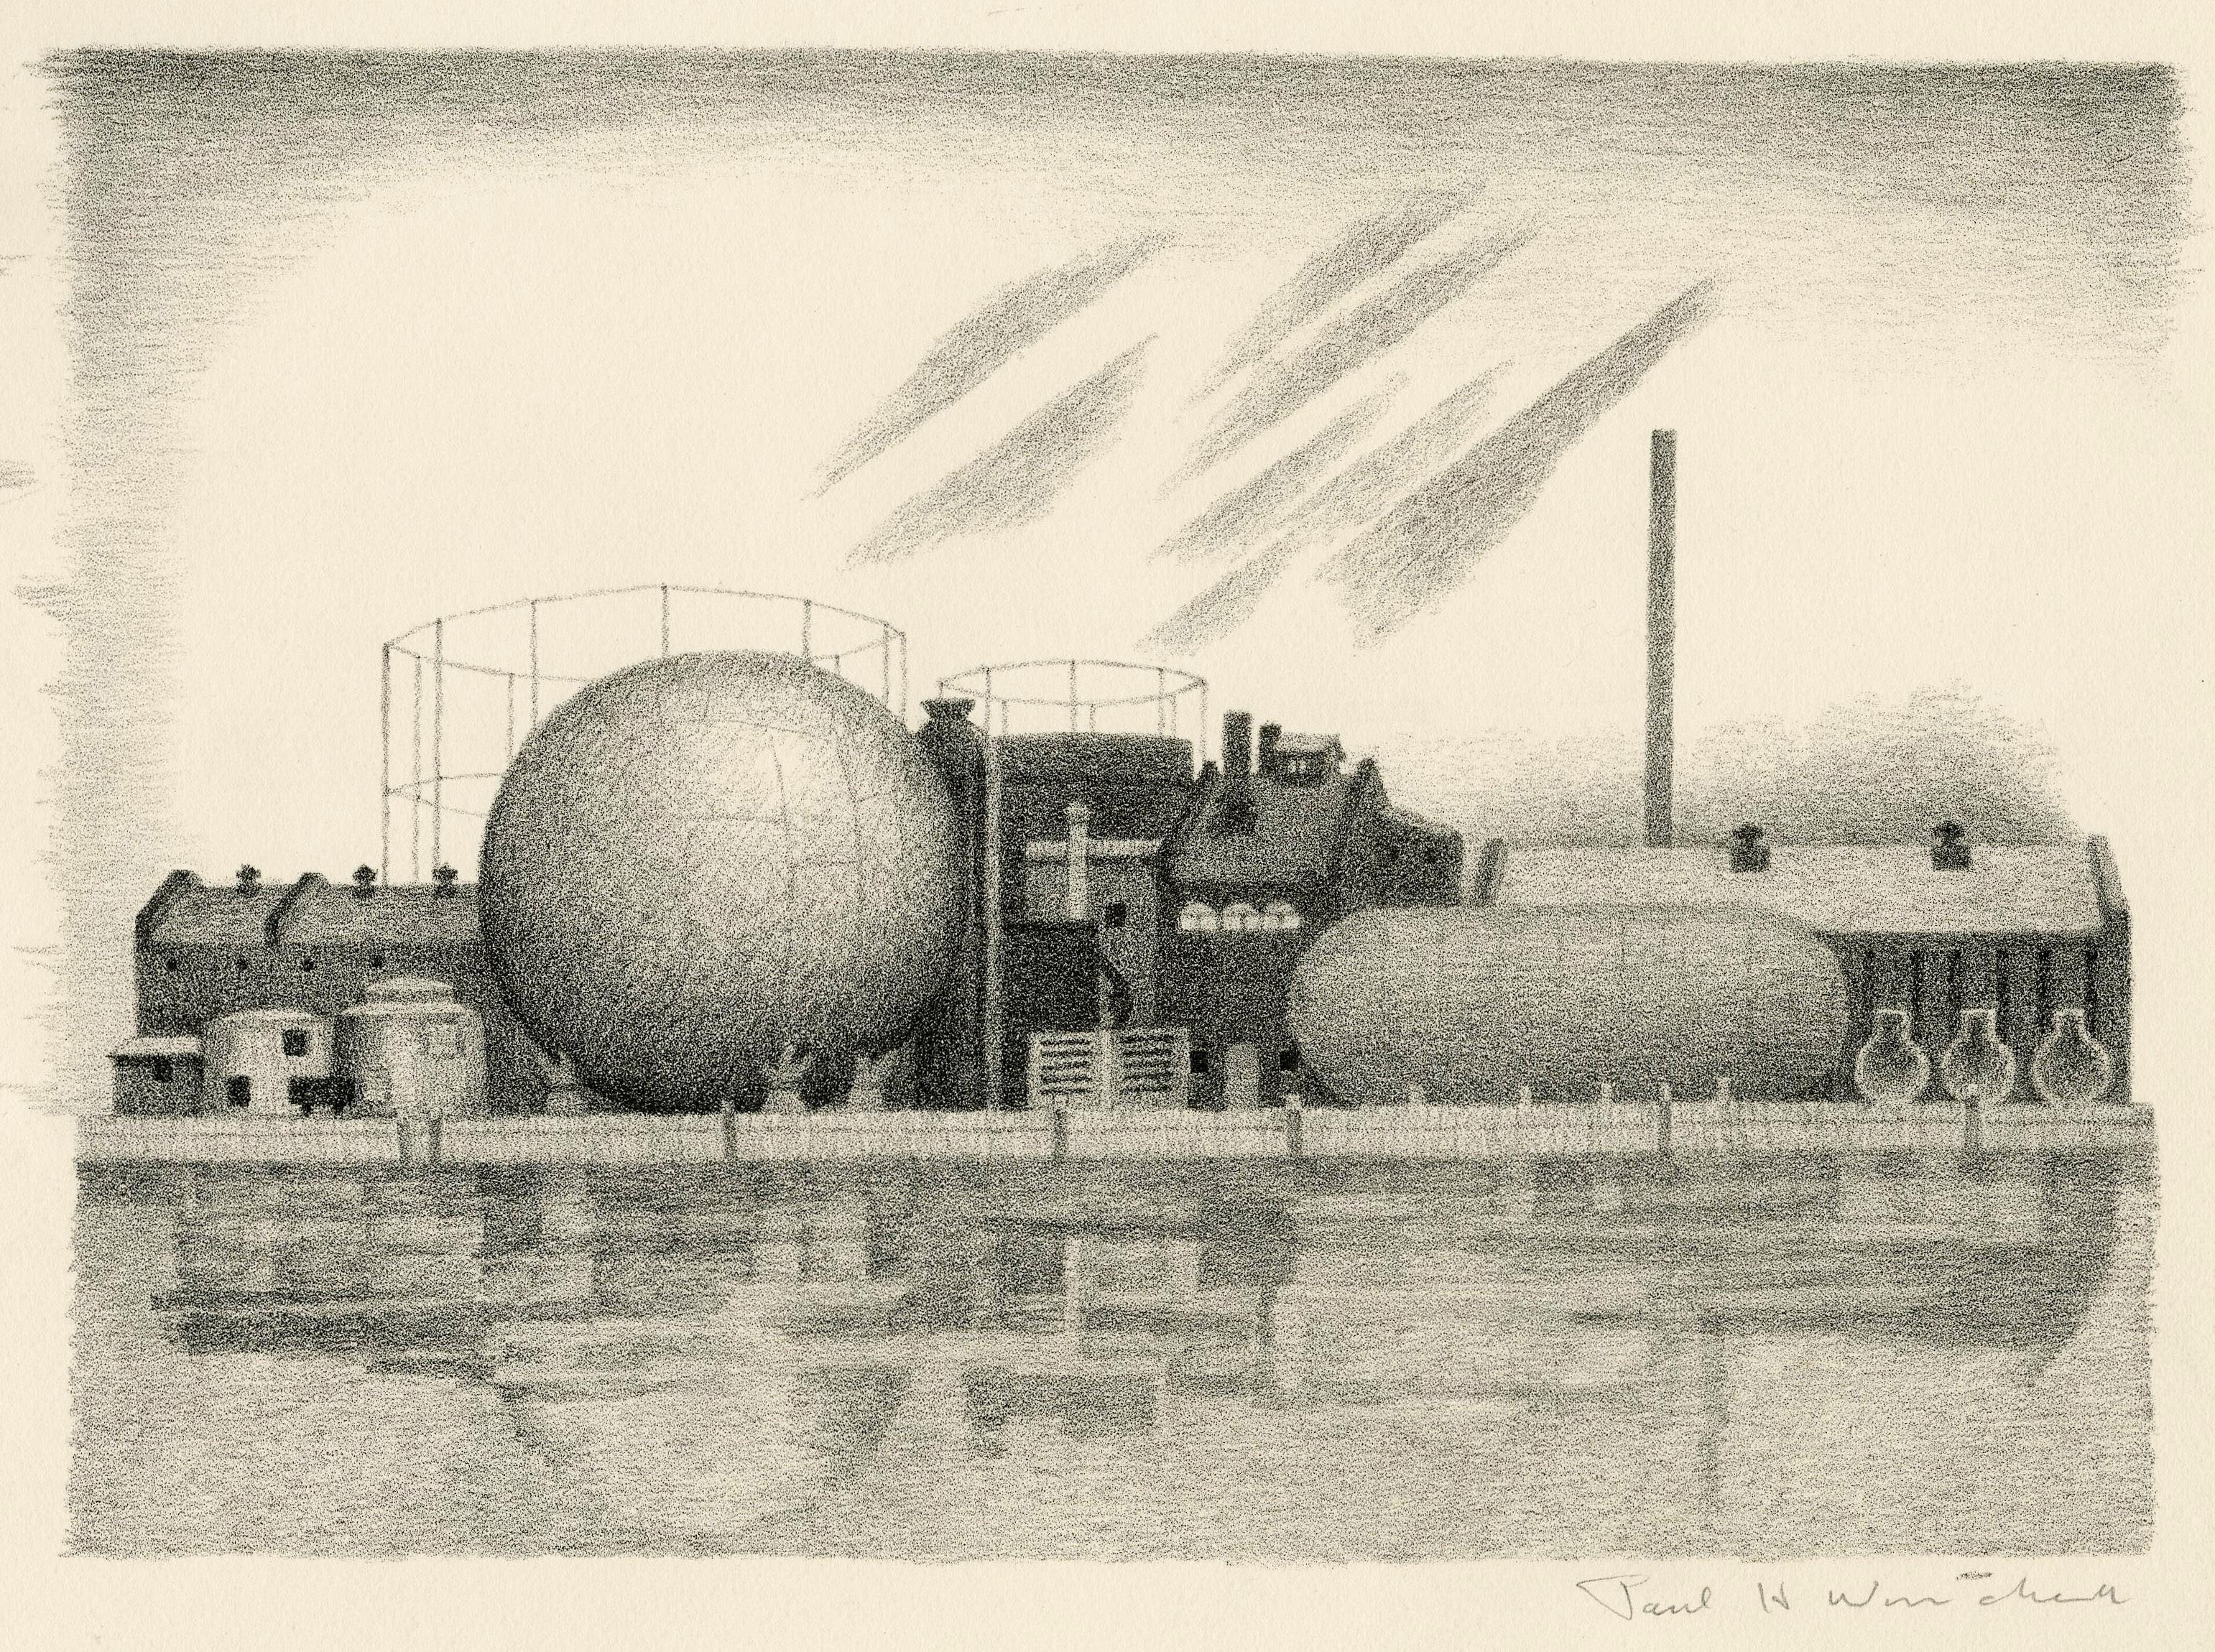 Refinery Scene - Print by Paul H. Winchell